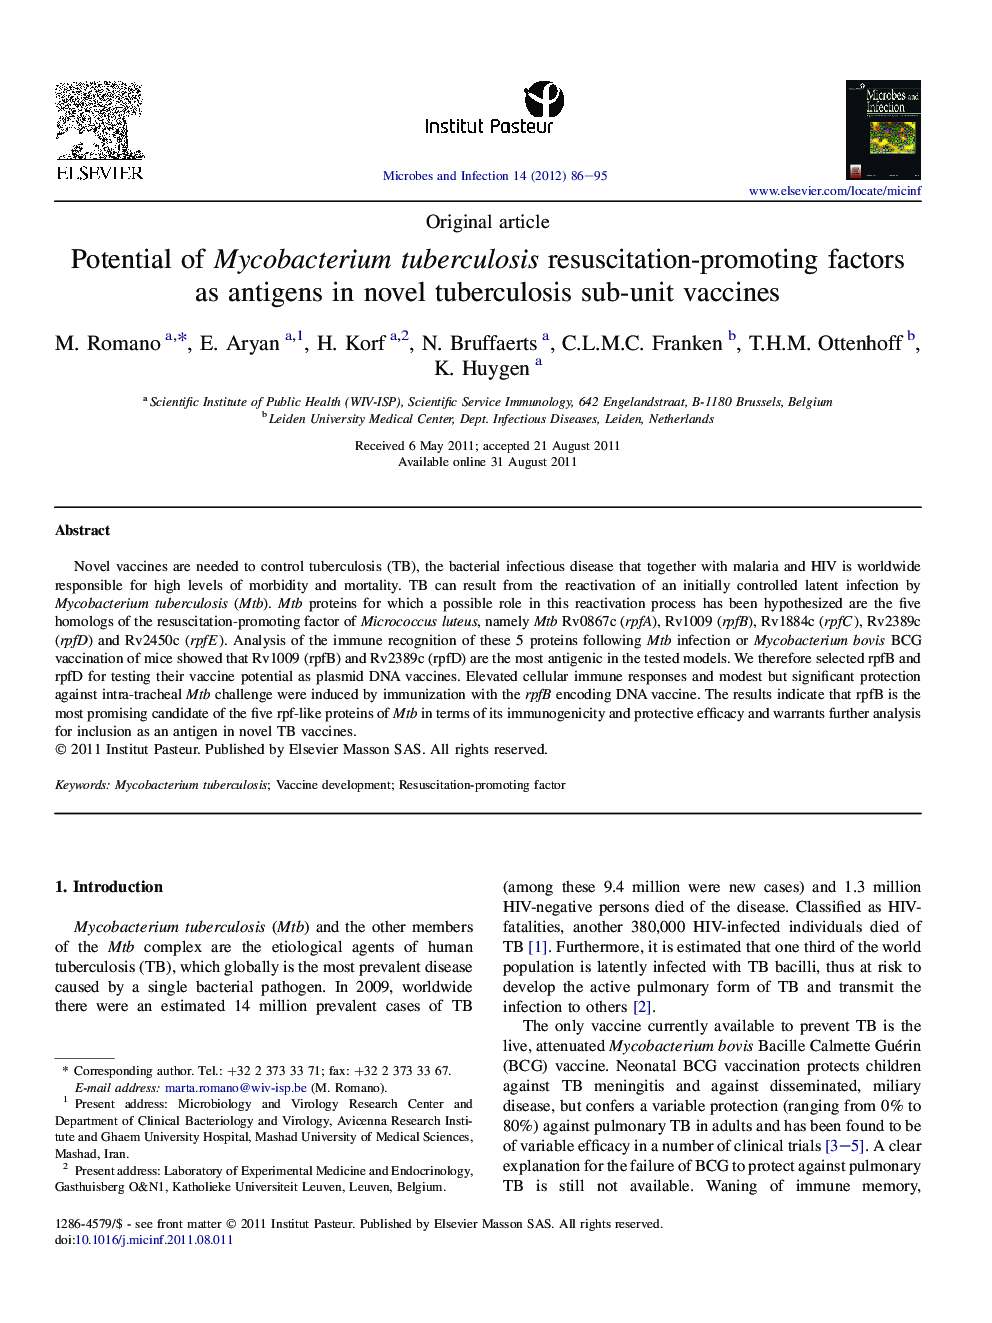 Potential of Mycobacterium tuberculosis resuscitation-promoting factors as antigens in novel tuberculosis sub-unit vaccines